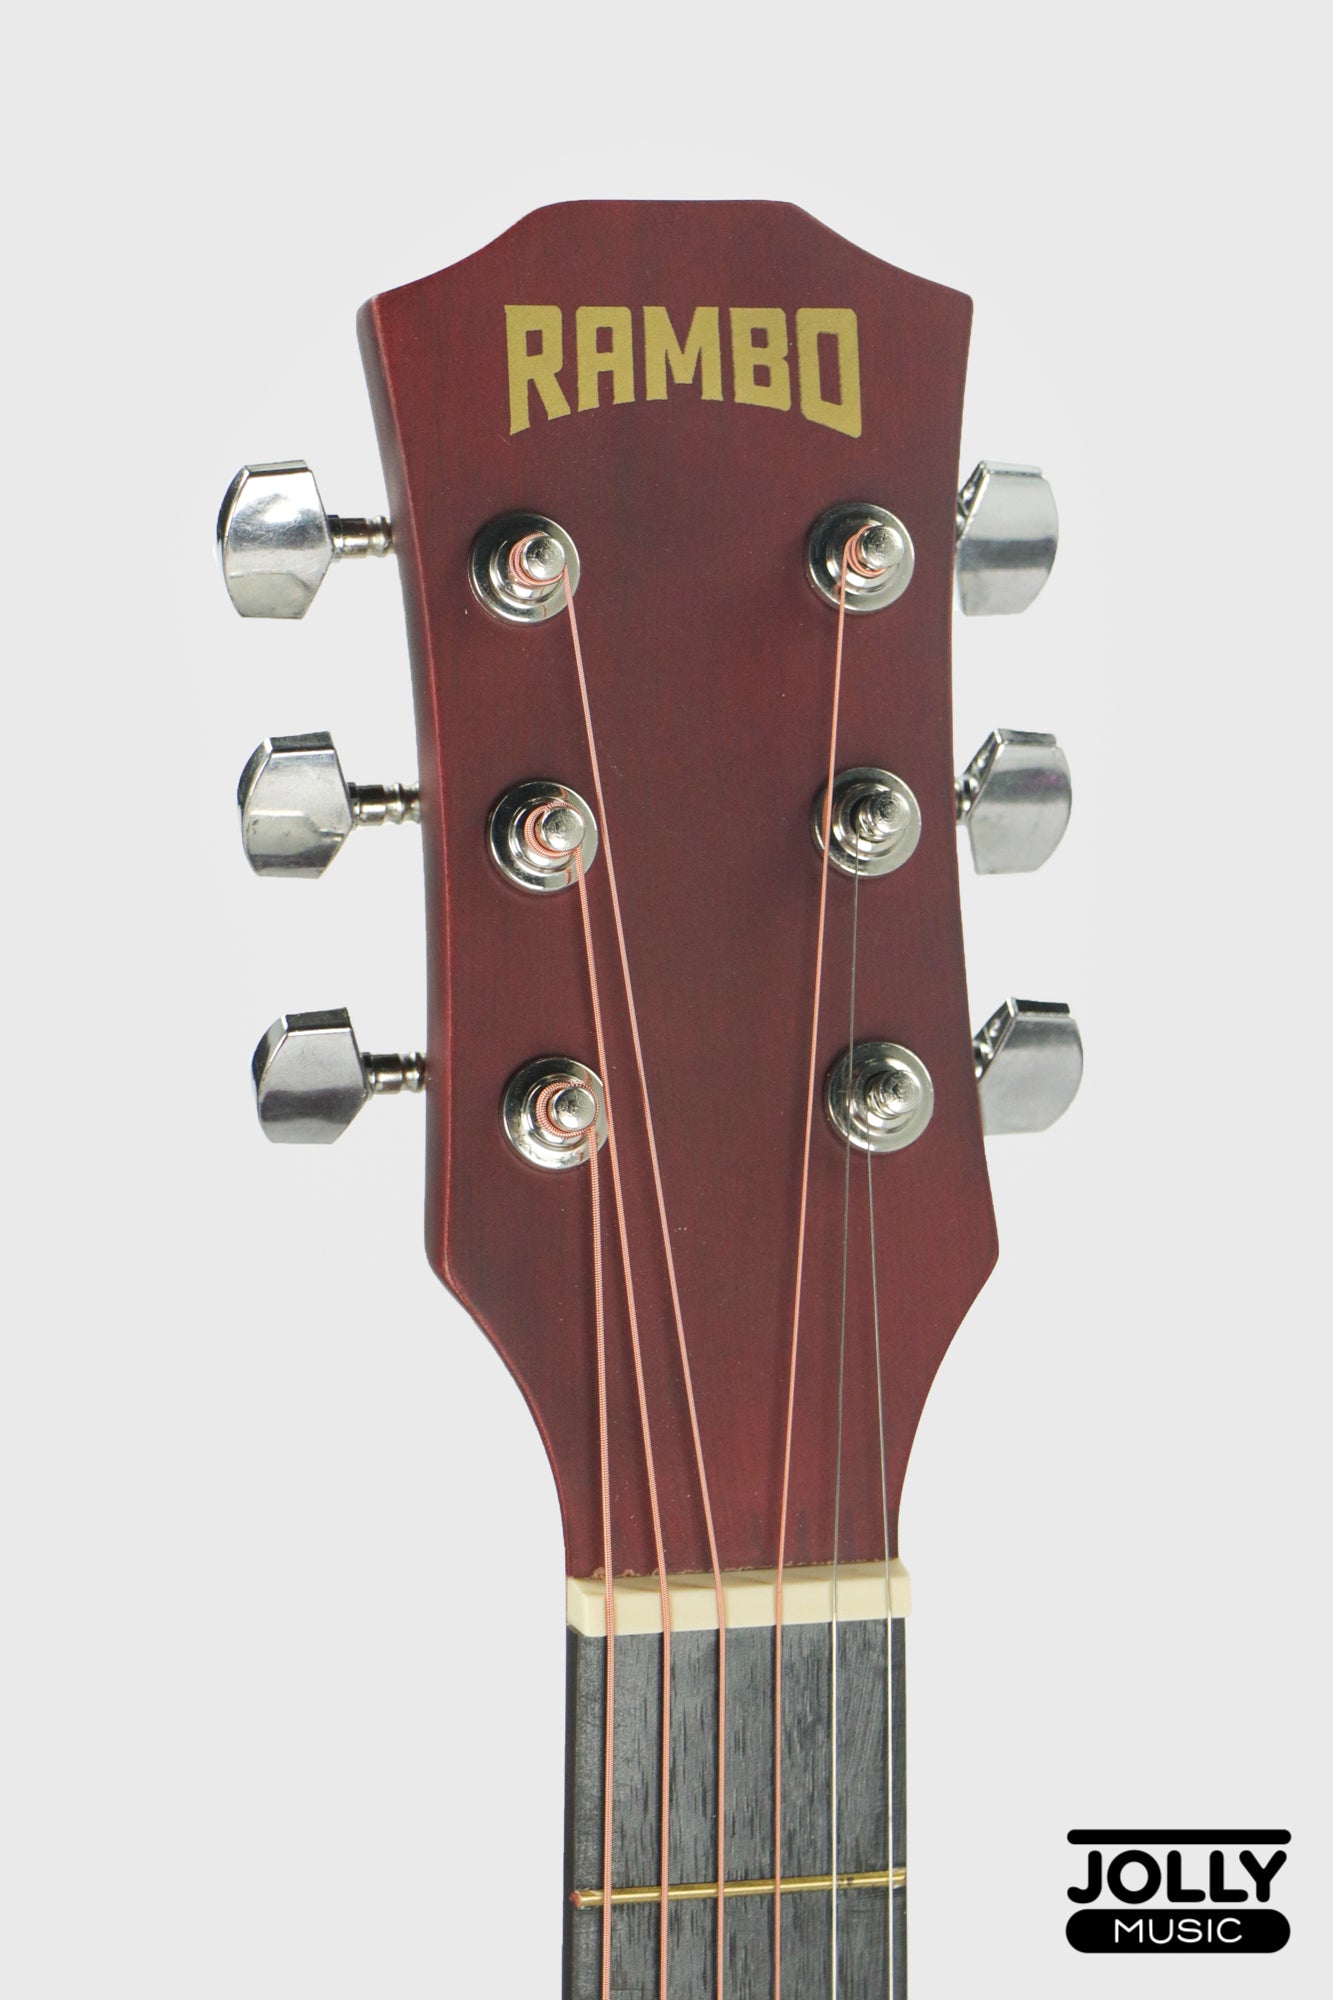 Rambo 41" Guitar K-41Y Truss Rod w/ Case, 3 Picks, Tuner, Capo - Sunburst